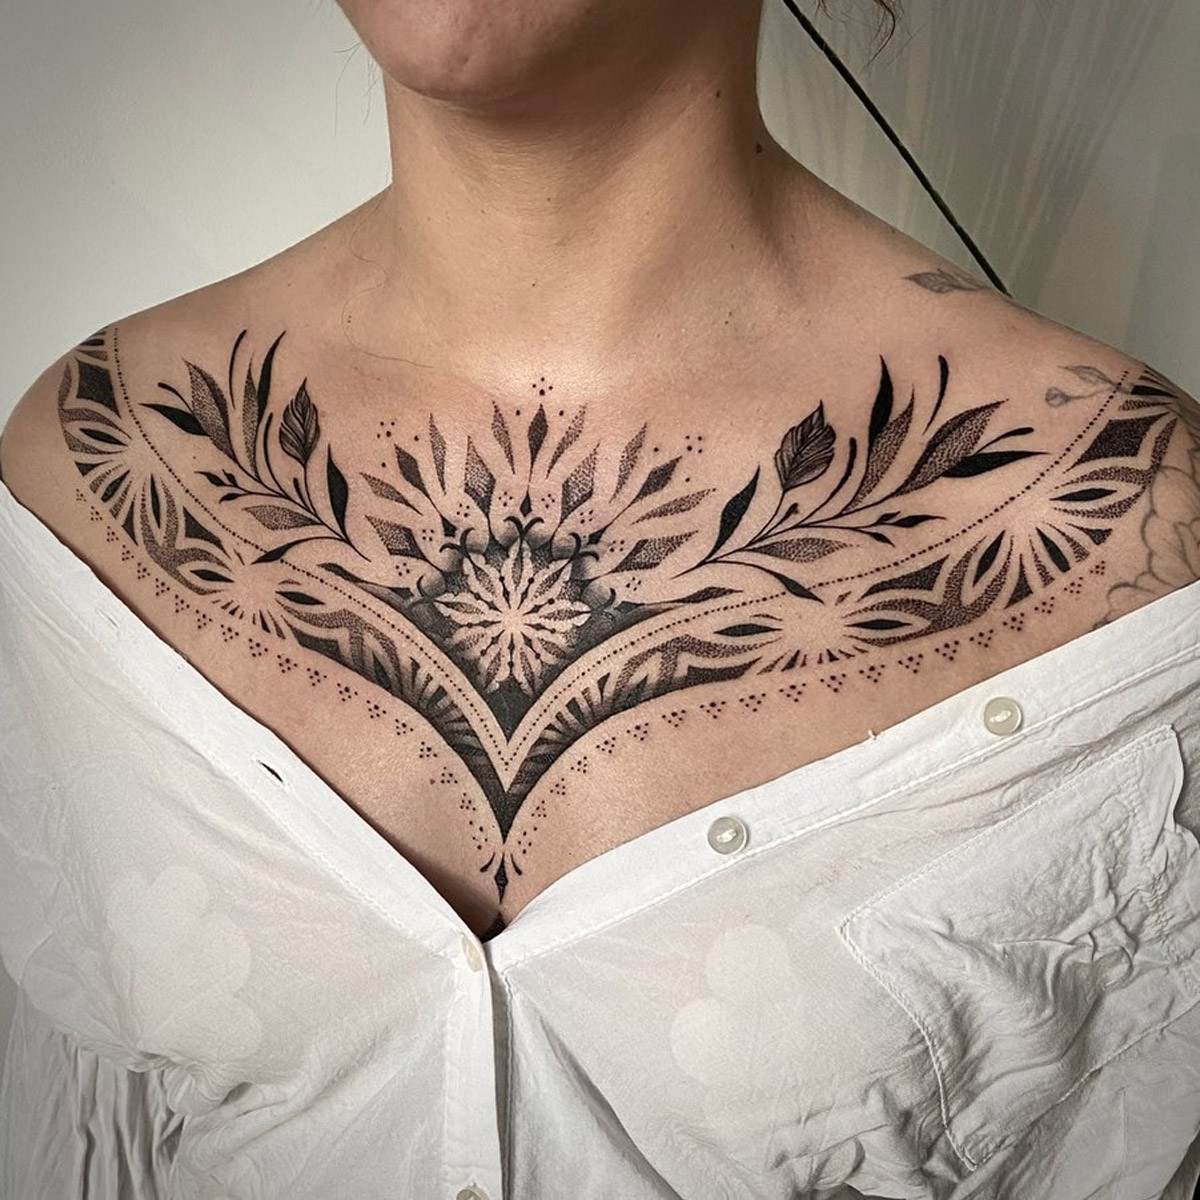 Ornamental Chest With Mandala & Leaves | Best Tattoo Ideas For Men & Women